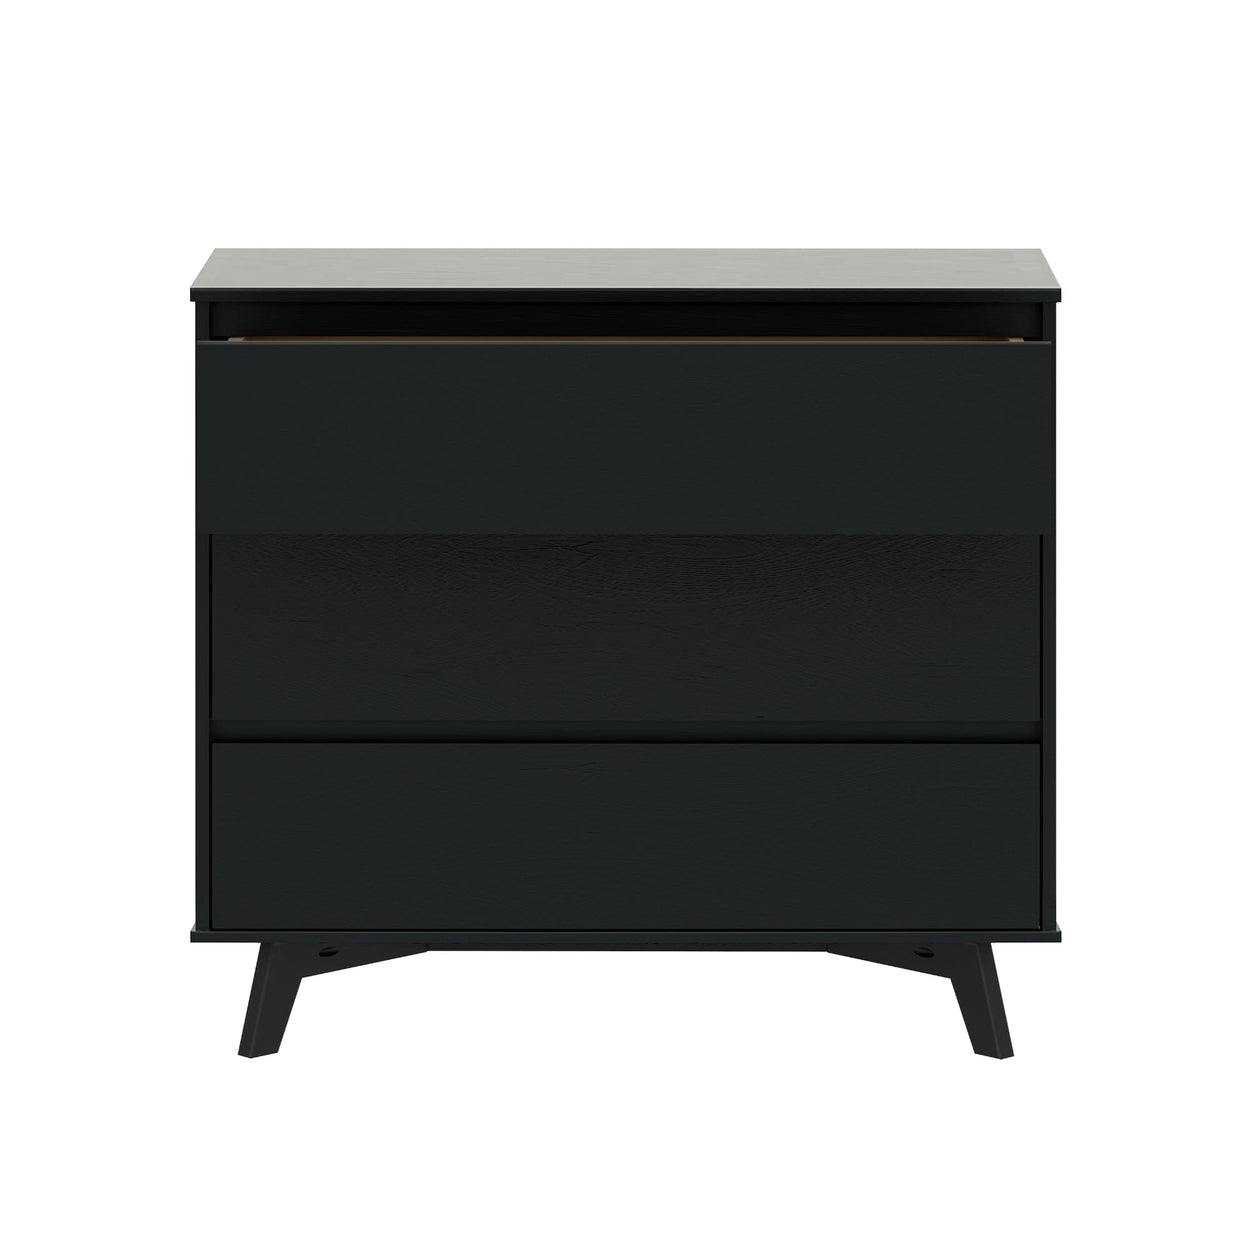 210003-170 : Furniture Scandinavian 3-Drawer Dresser, Black